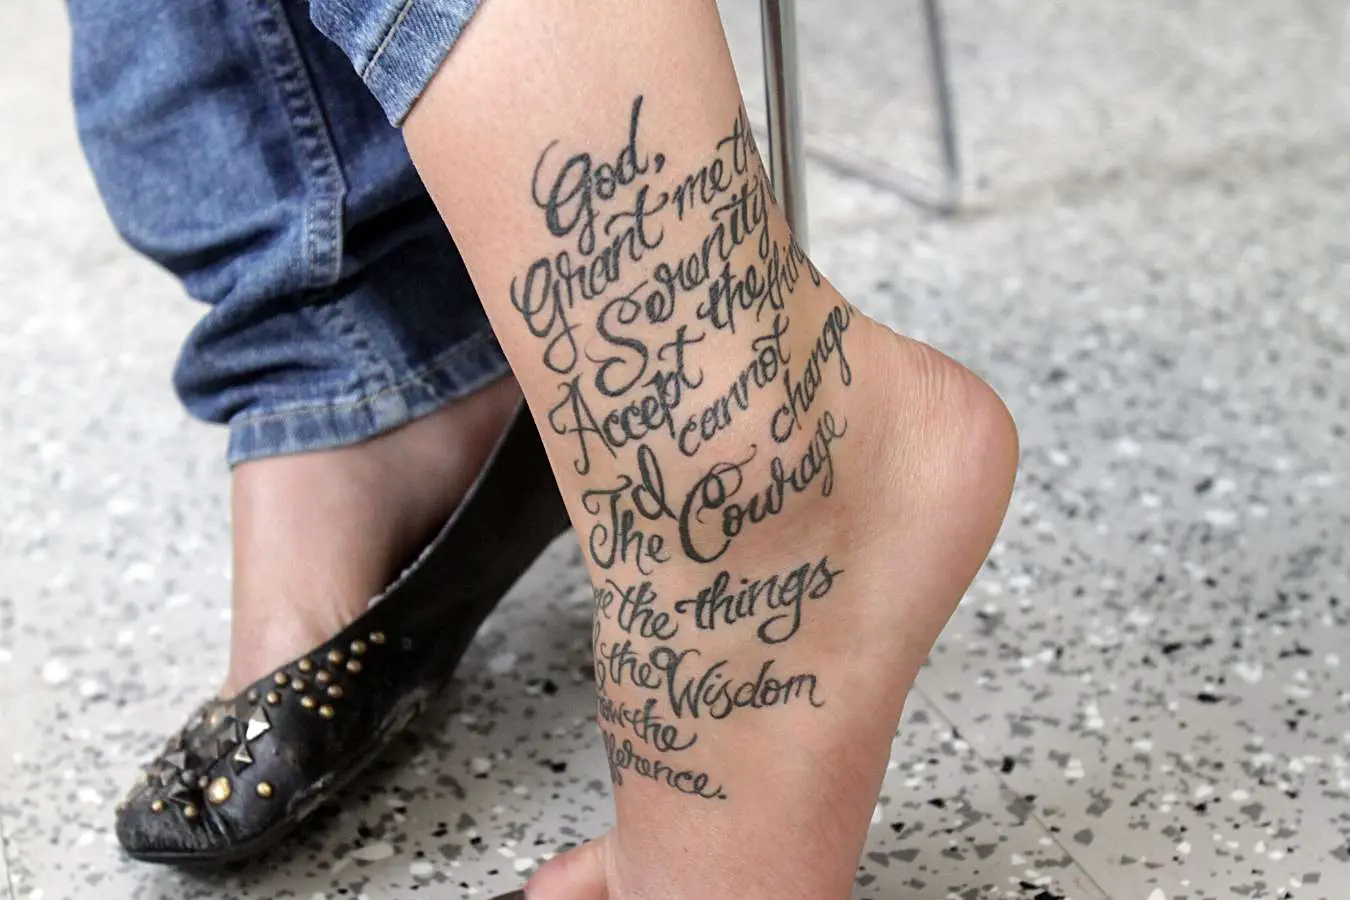 Bellissimi tatuaggi caviglia